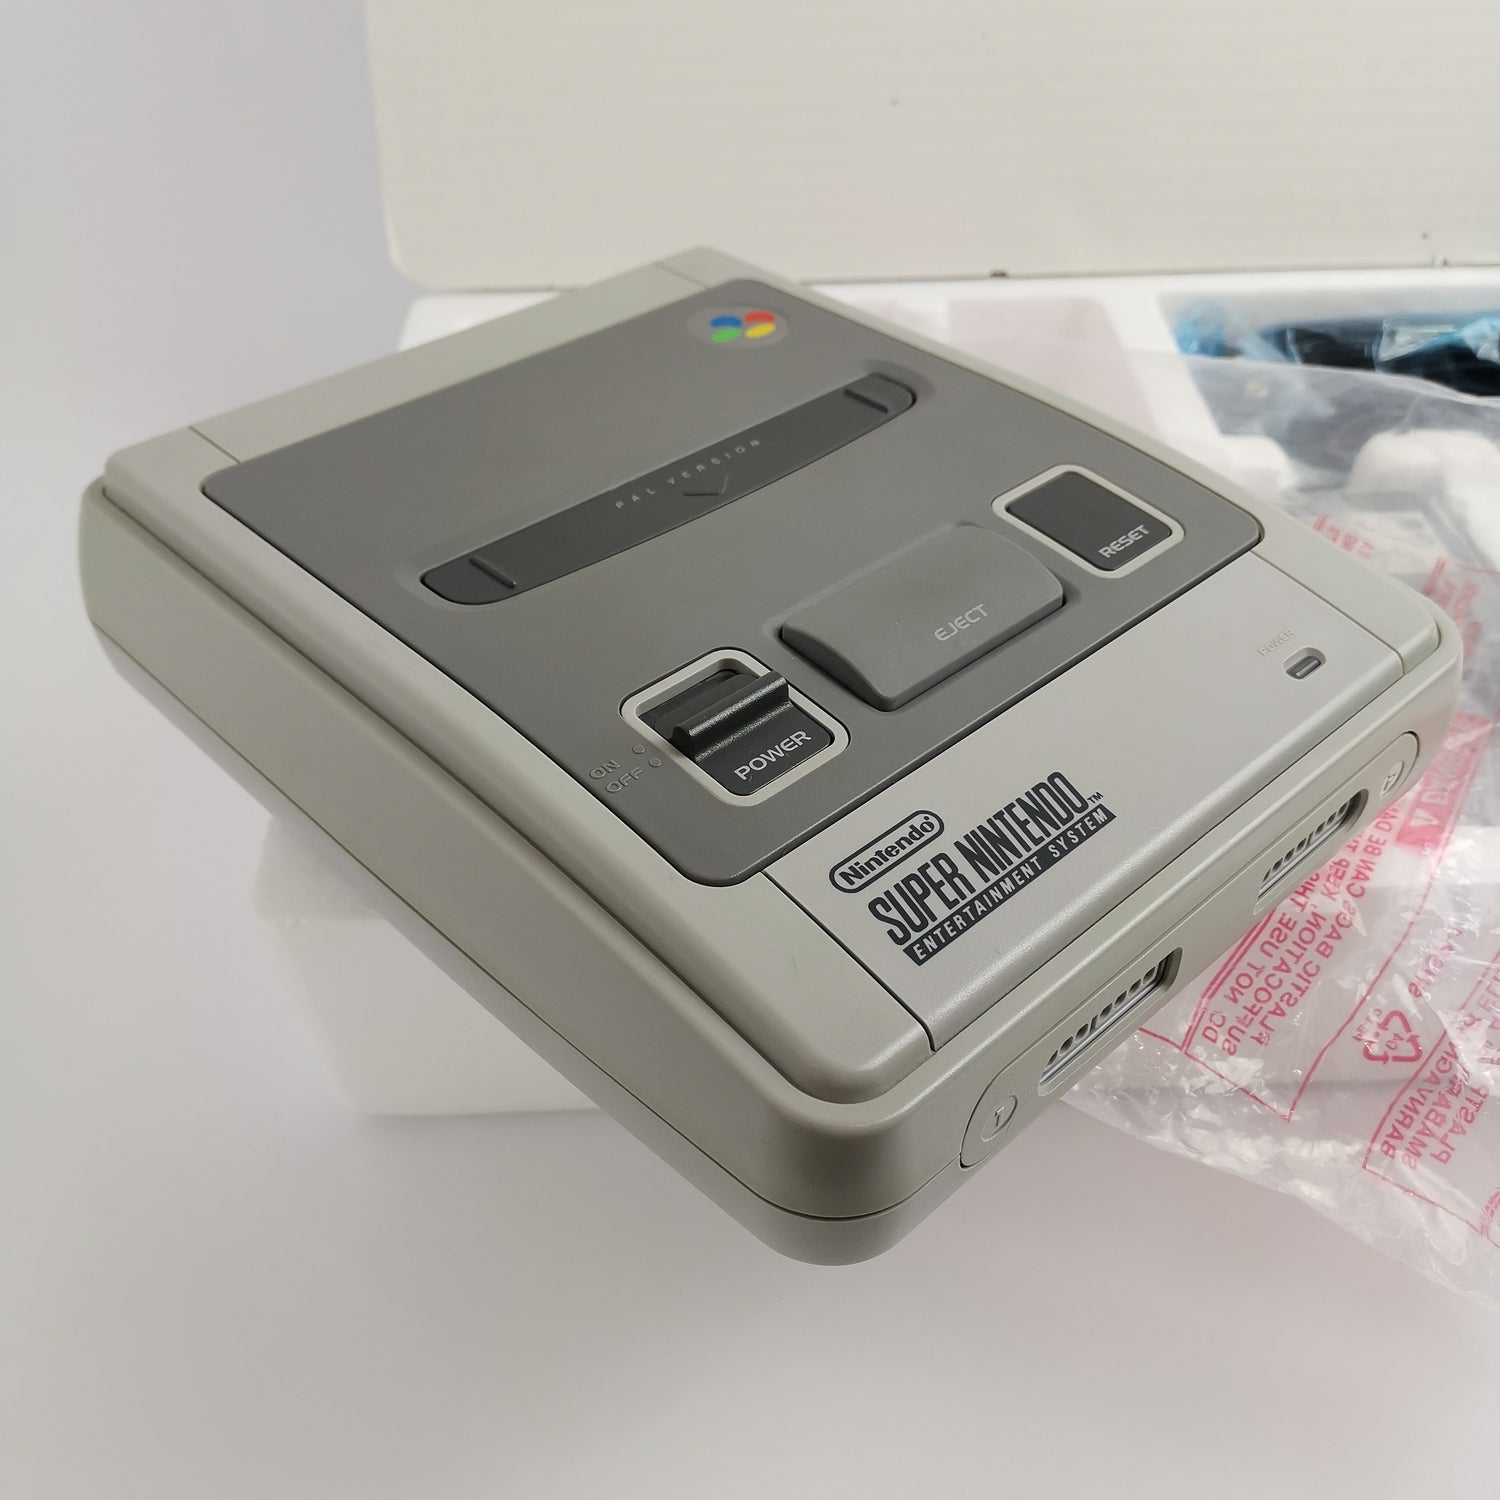 Super Nintendo Console: Super Mario World Pak | SNES Console - OVP PAL NOE-1